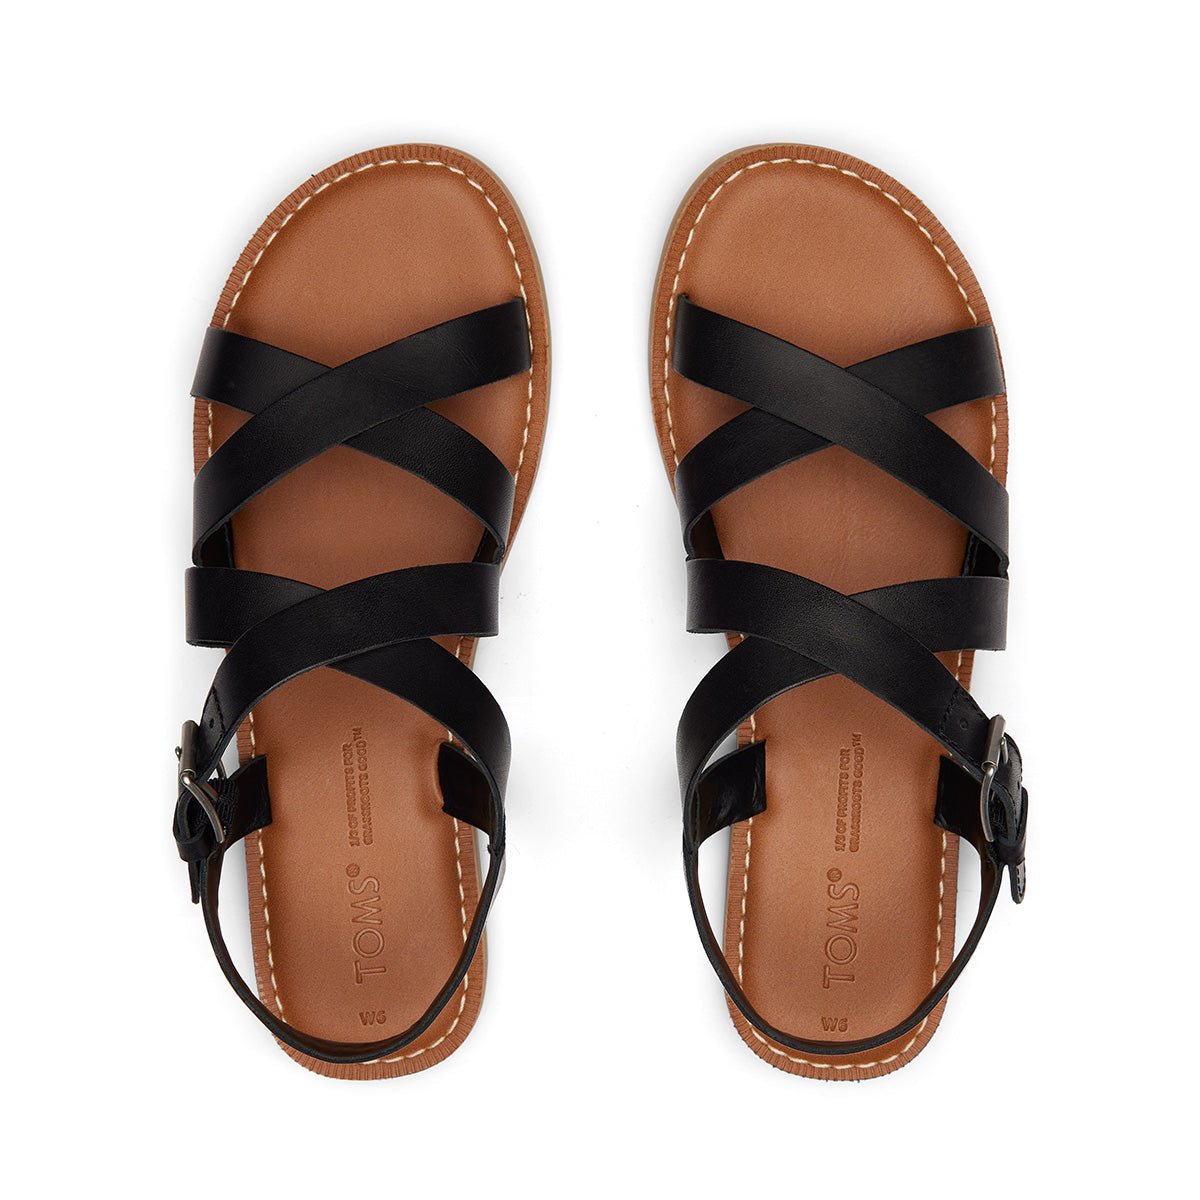 TOMS Sandals Sicily Women - Black Leather